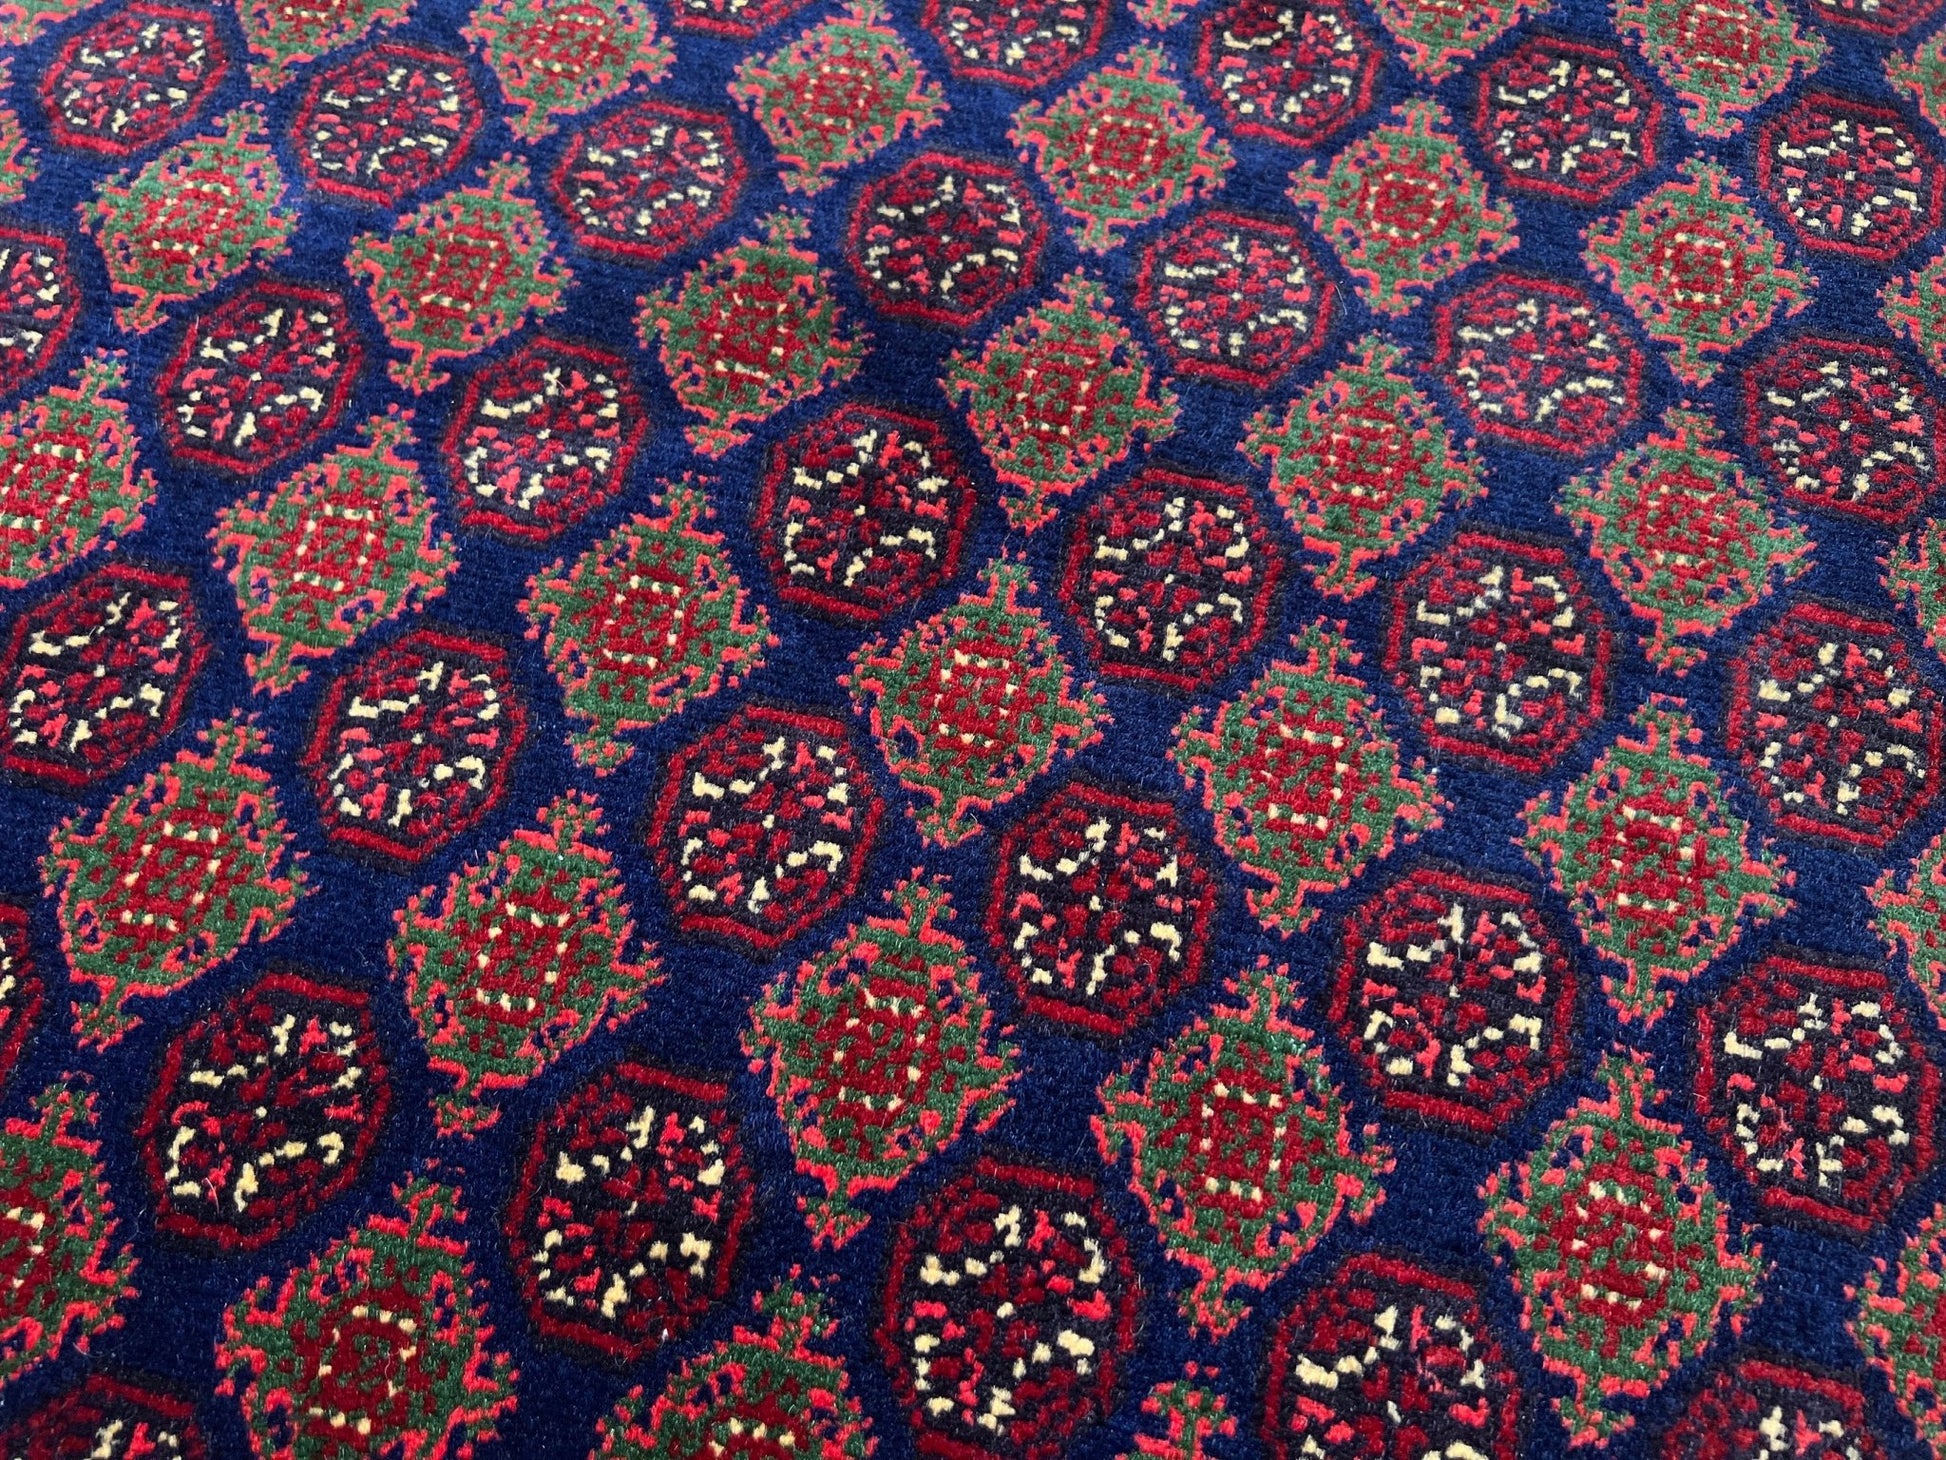 Burgundy navy Turkmen fine handmade area rug shop palo alto. Oriental rug shop san francisco bay area. Luxury rug from afghanistan